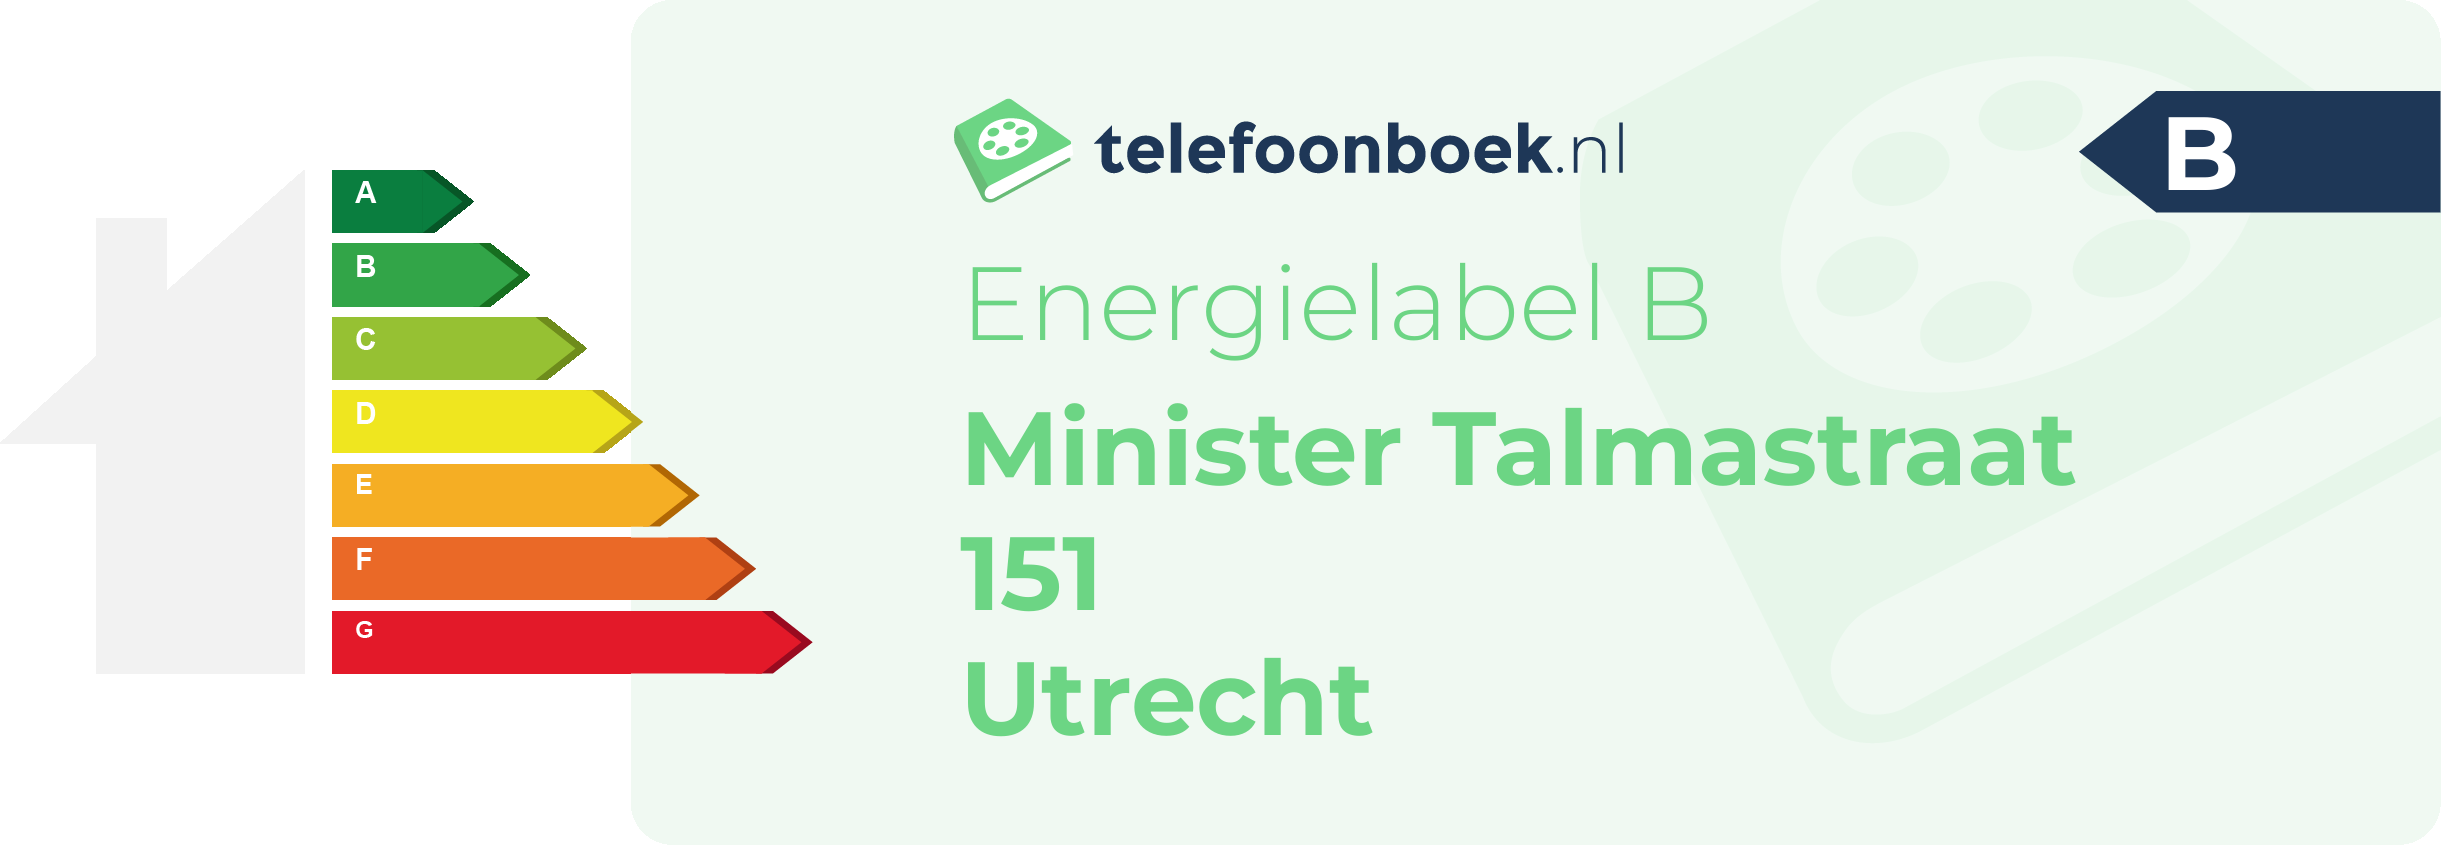 Energielabel Minister Talmastraat 151 Utrecht